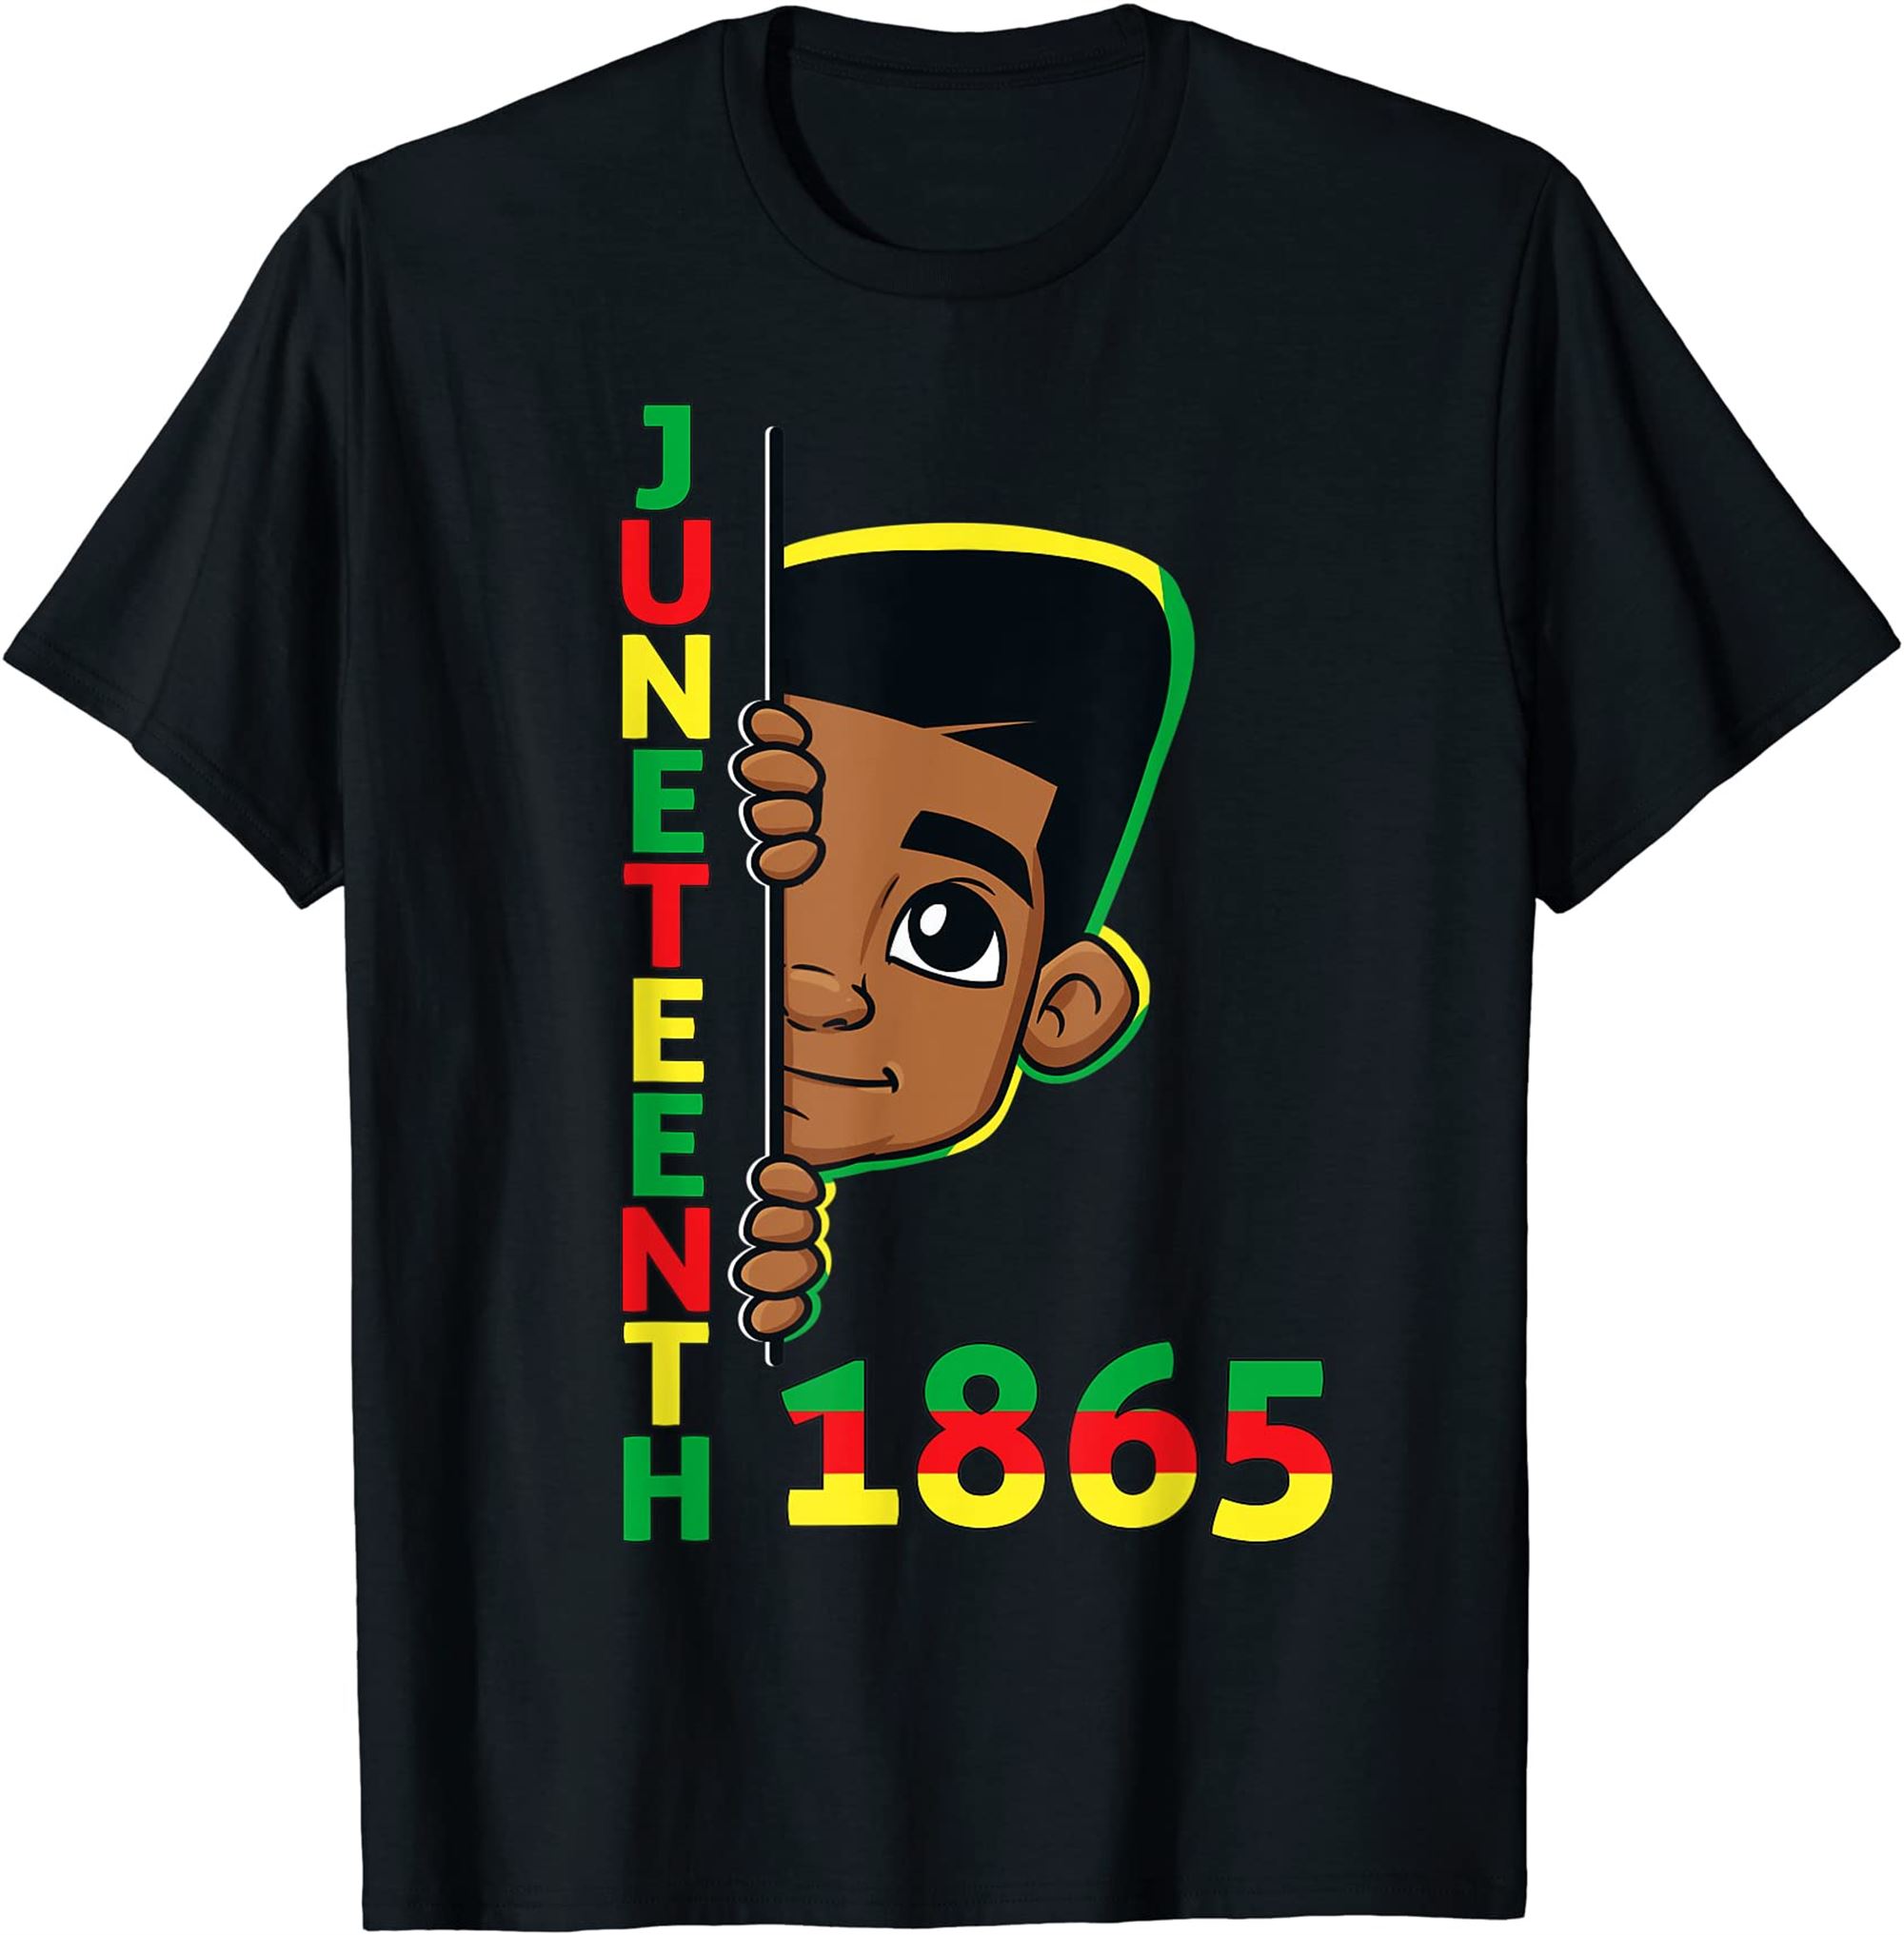 Juneteenth Celebrating 1865 Cool Brown Skin King Boys Kids T-shirt Size Up To 5xl